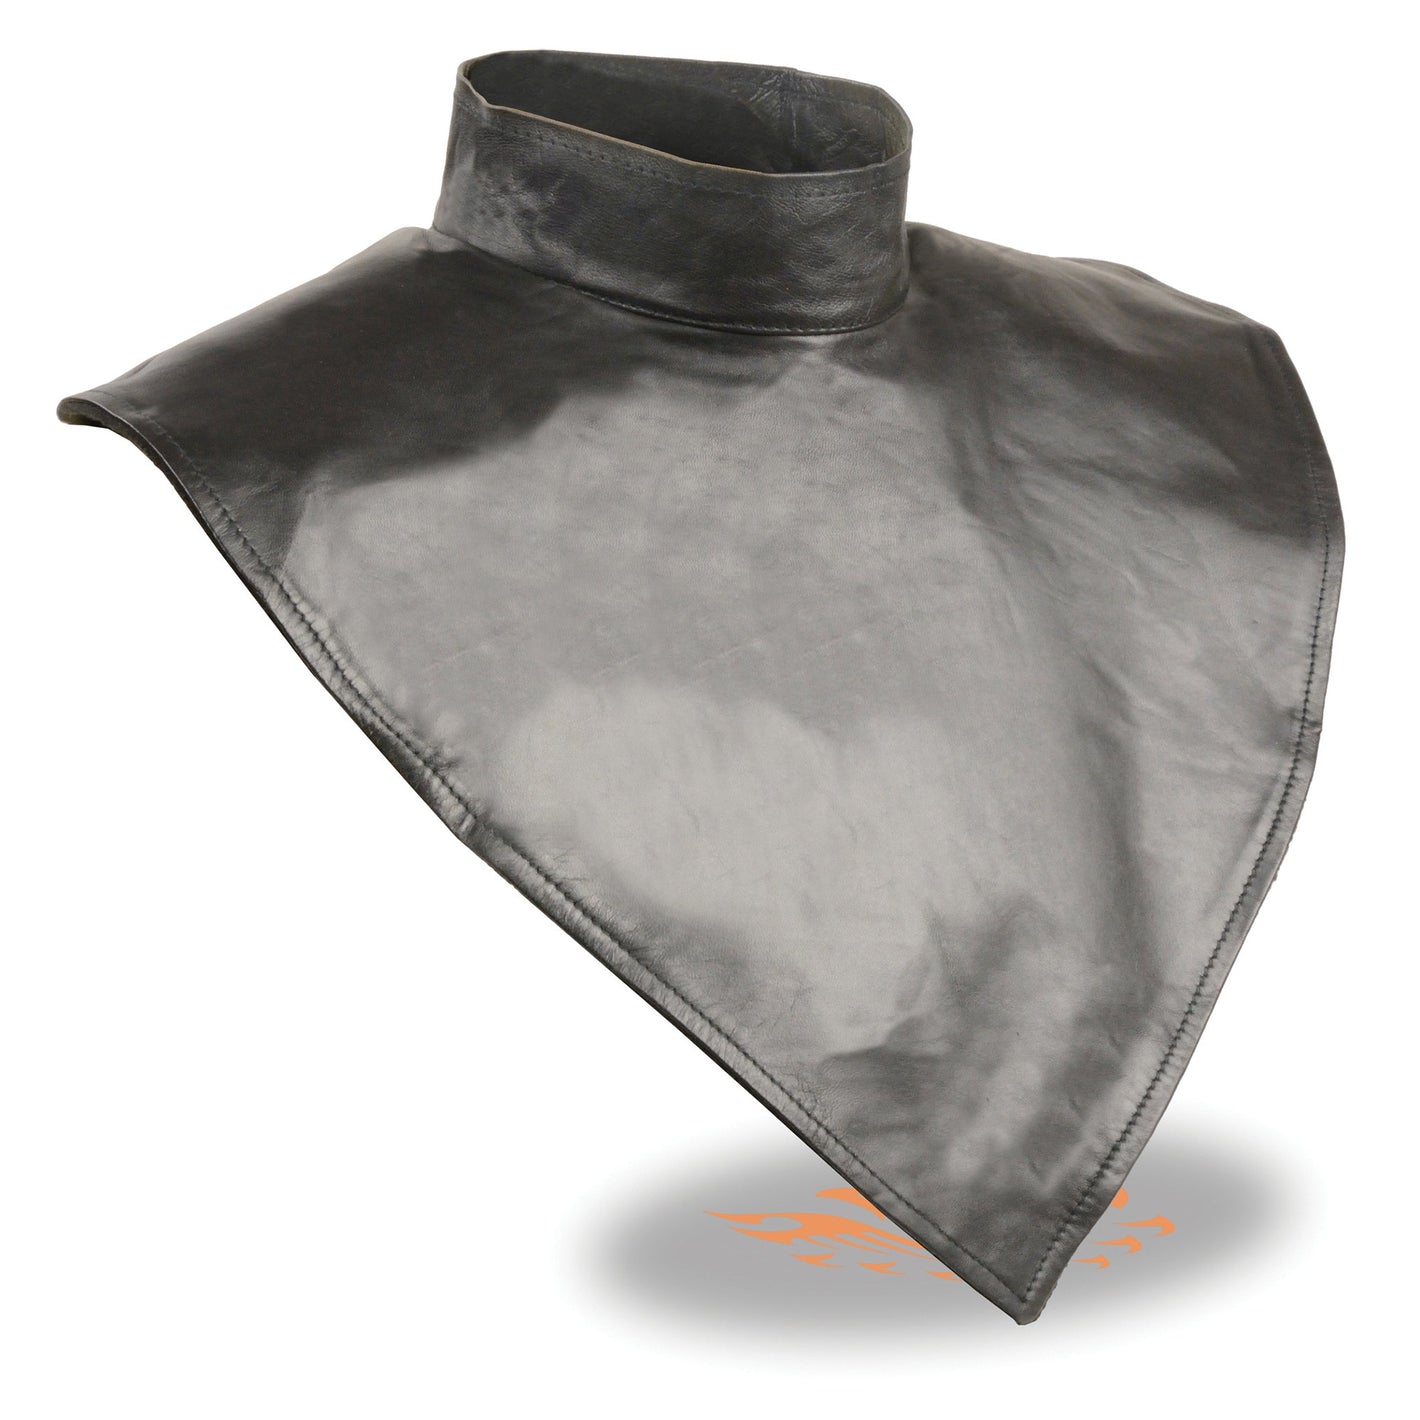 Unisex Premium Leather Neck Warmer w/ Fleece Liner